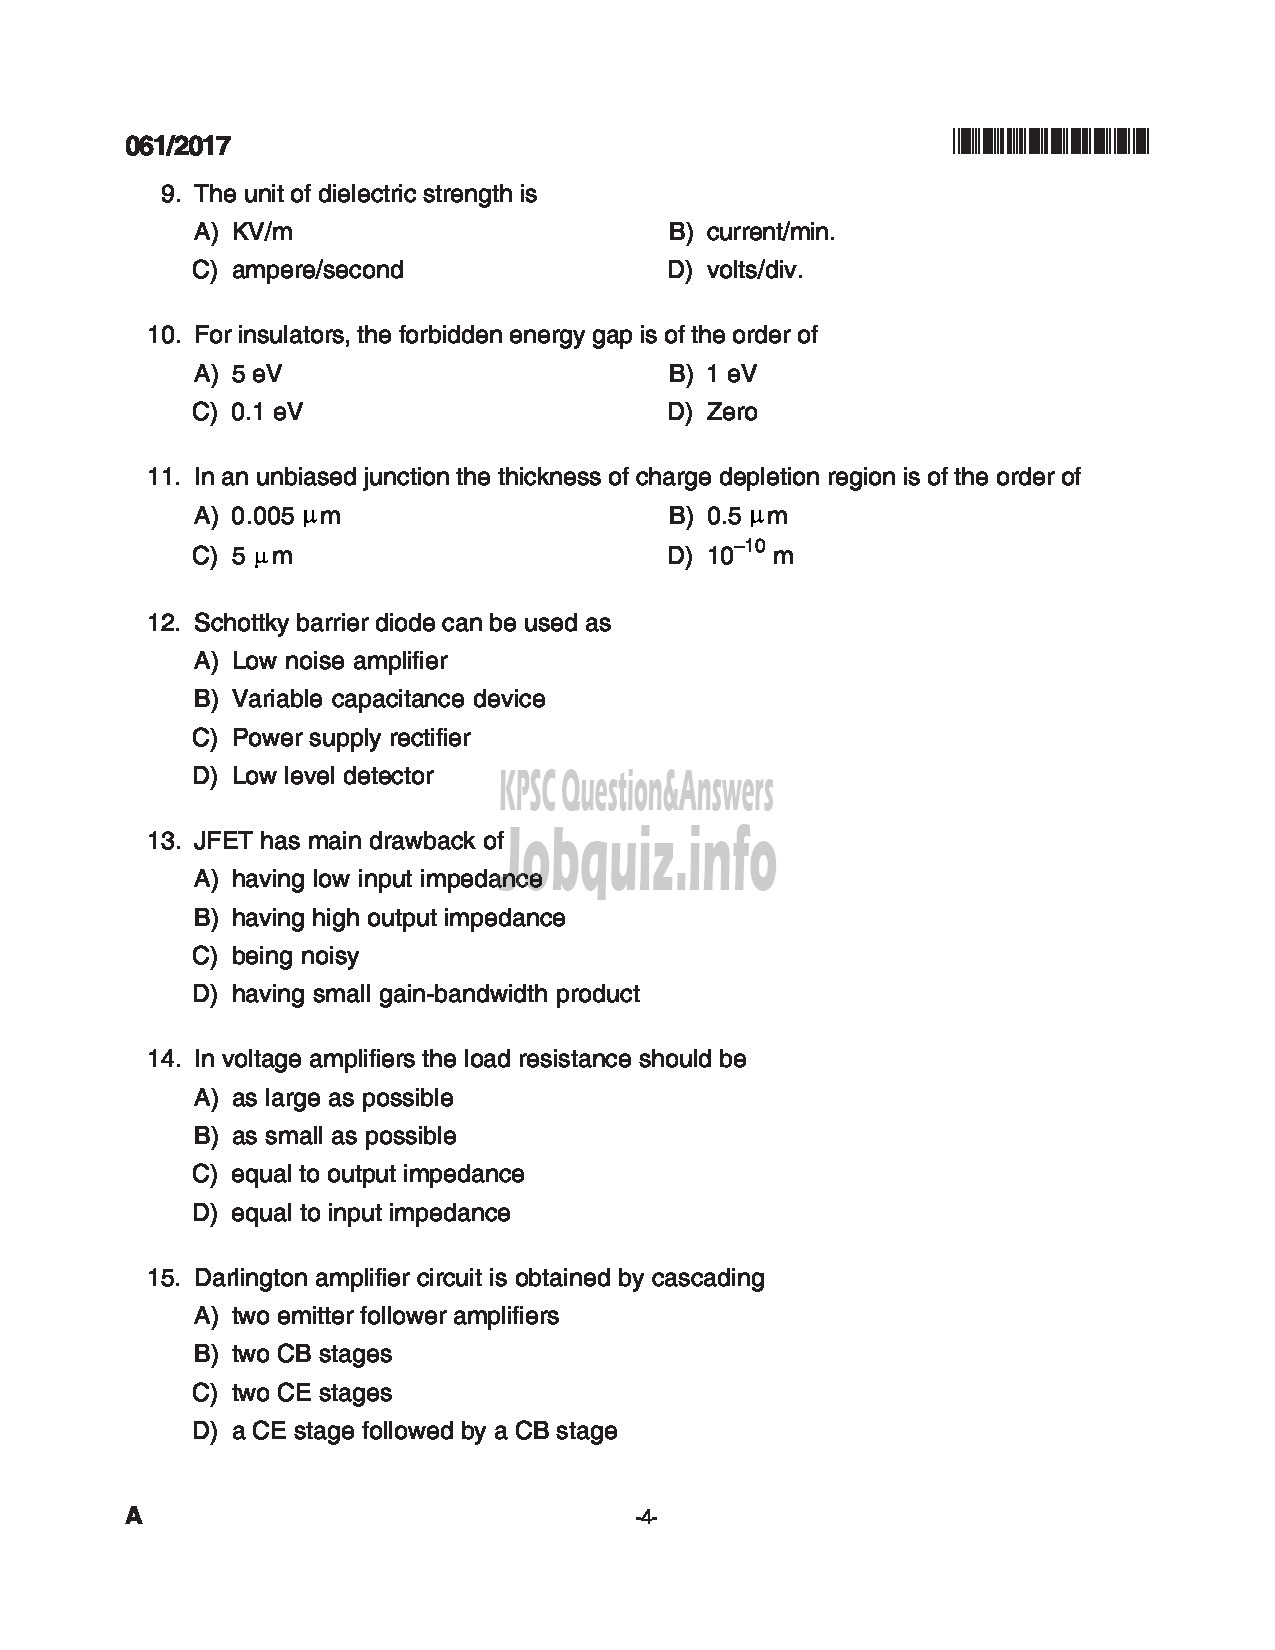 Kerala PSC Question Paper - TRADESMAN ELECTRONICS TECHNICAL EDUCATION QUESTION PAPER-4